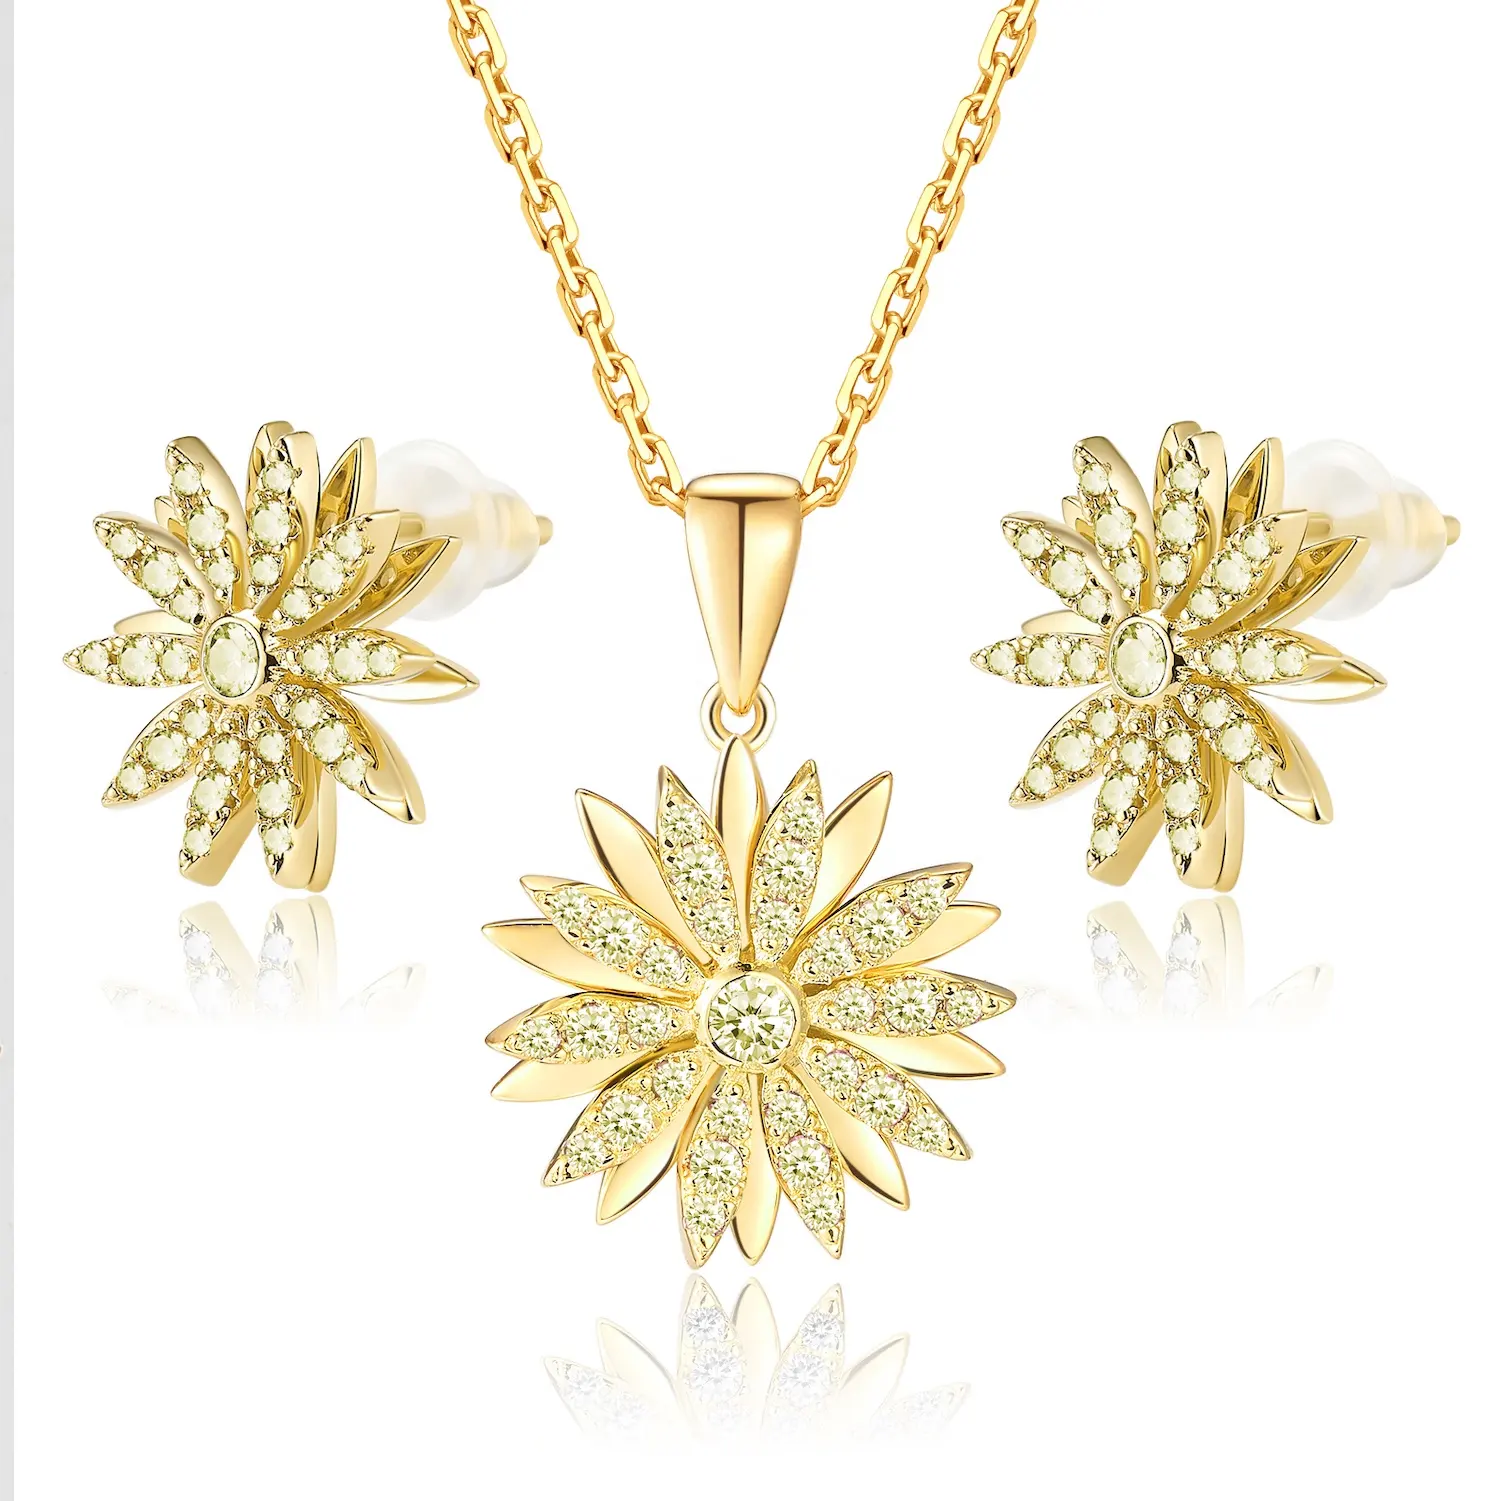 Zircon Rhinestone Decorated Flower Pendant 18k Gold plated Lady Women Metal Ball Chain Necklace Jewelry Set